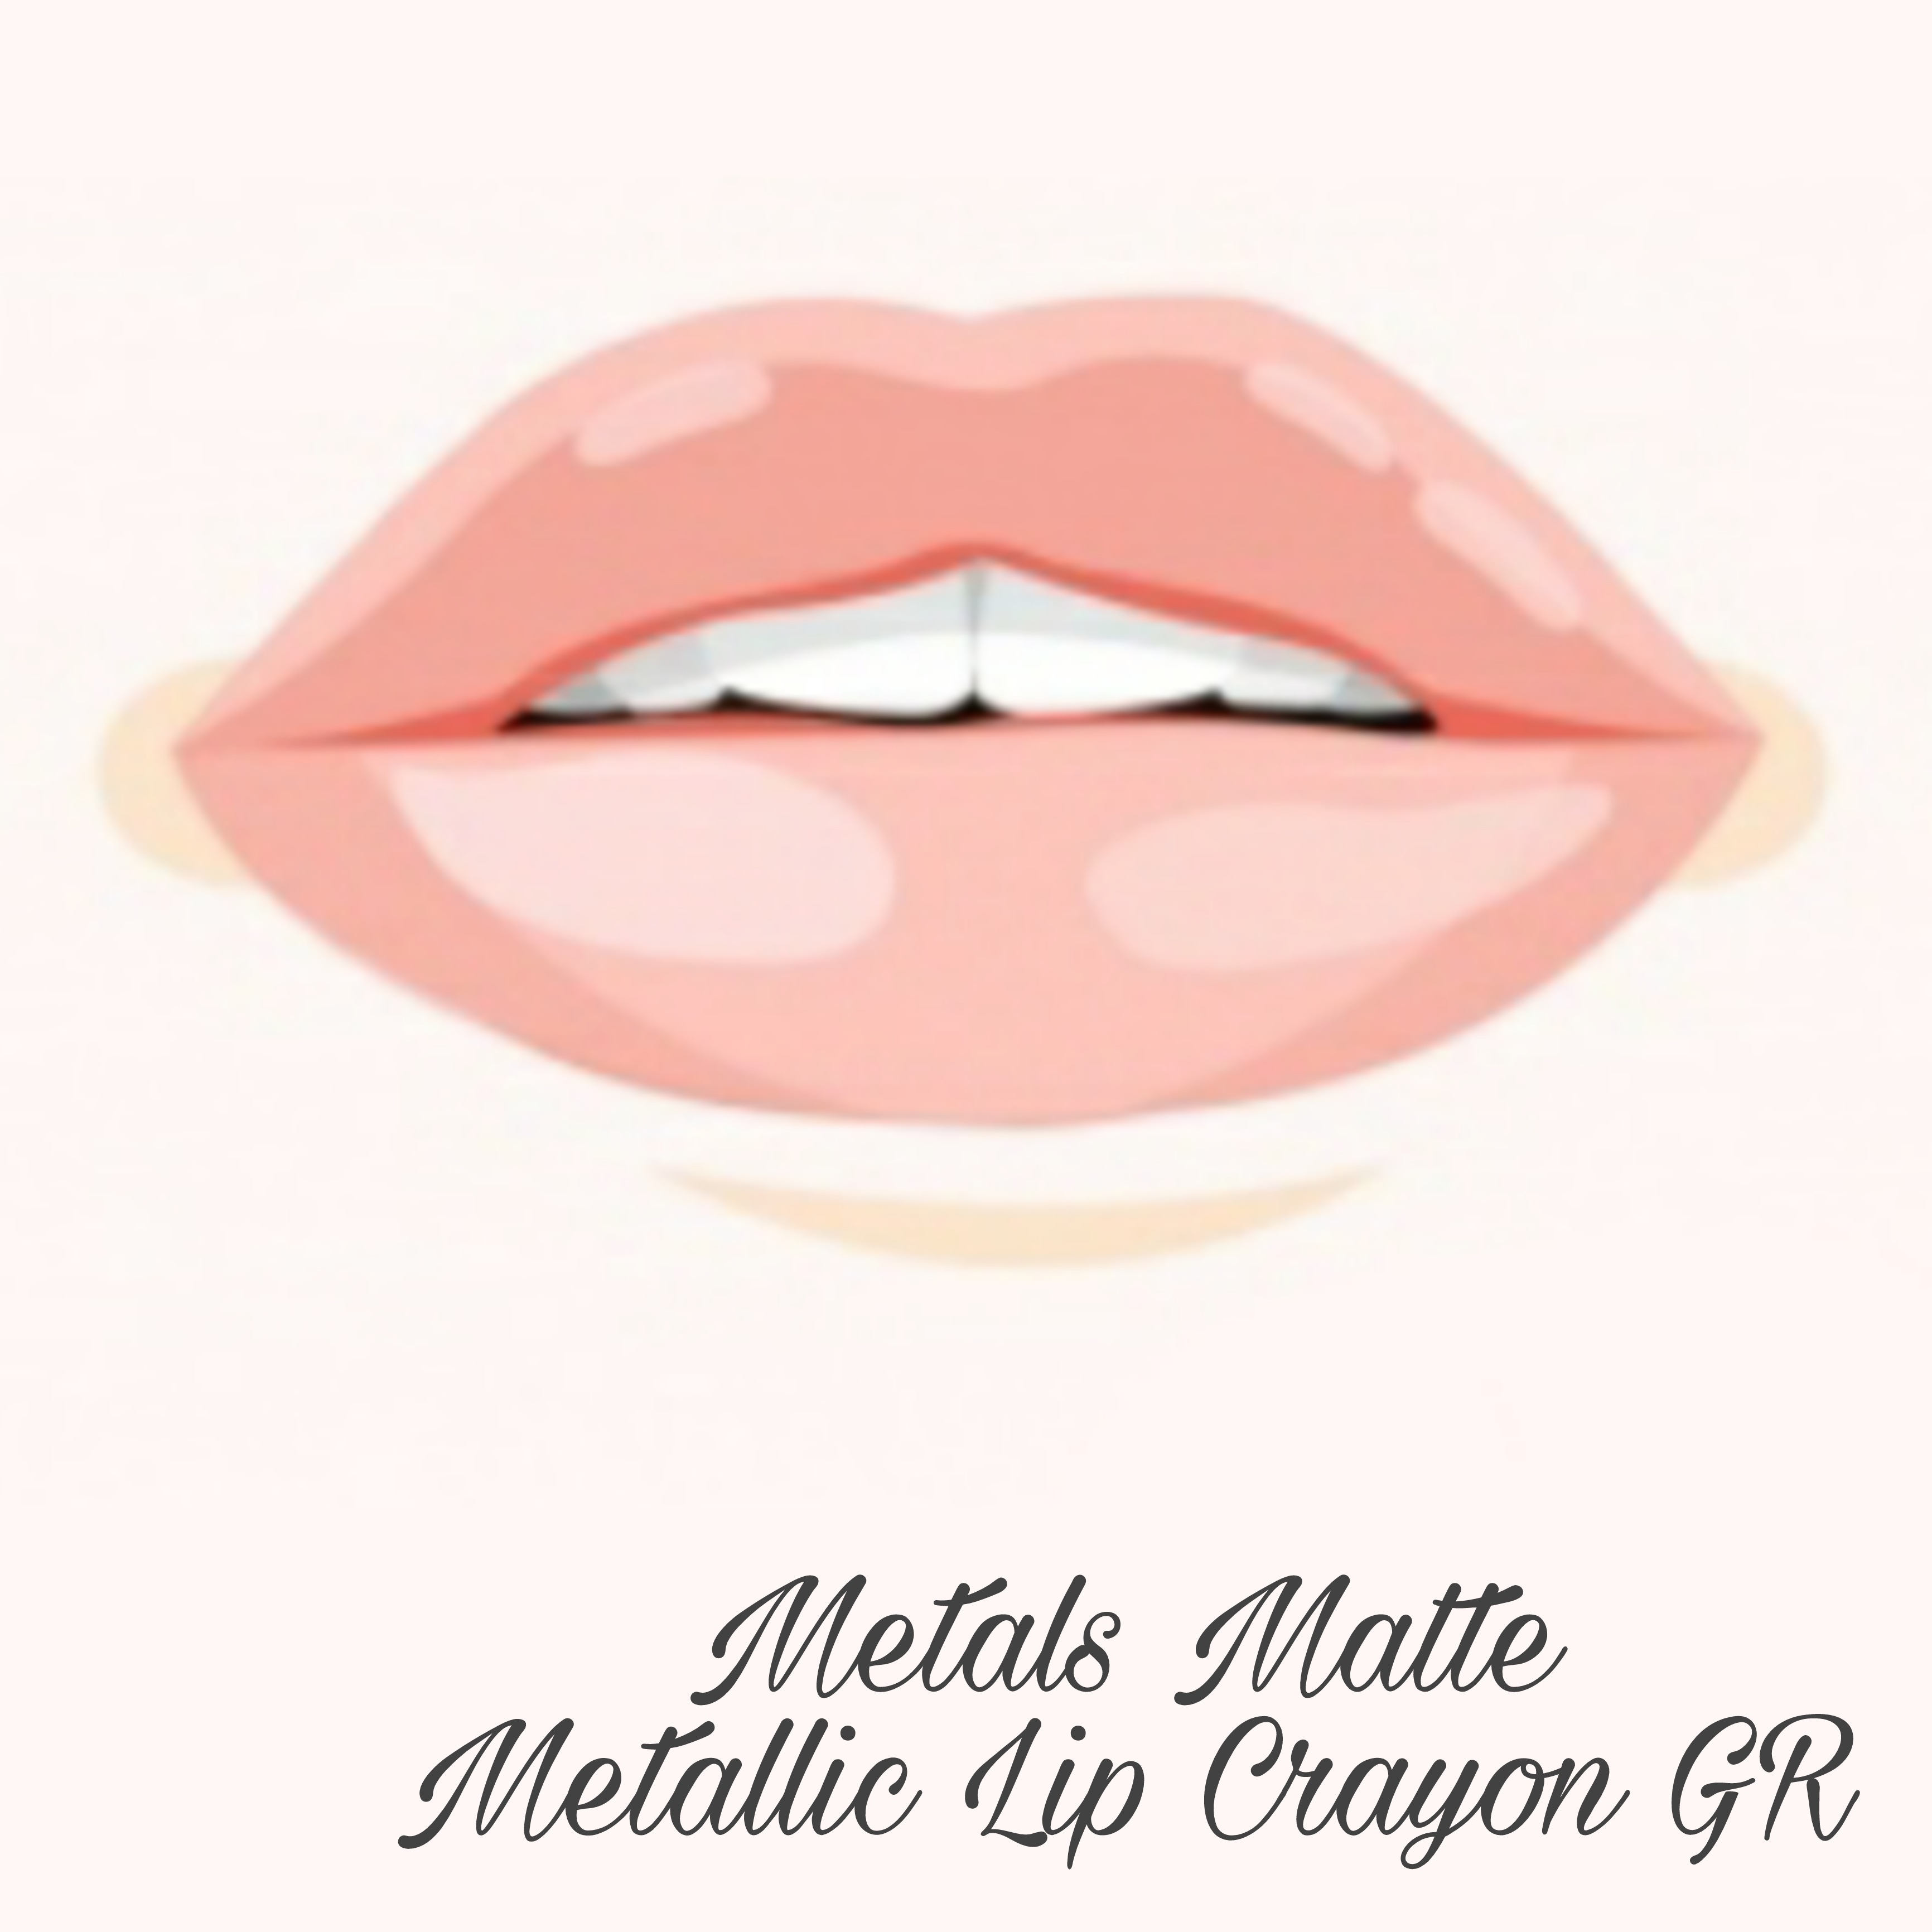 Metals Matte Metallic Lip Crayon GR